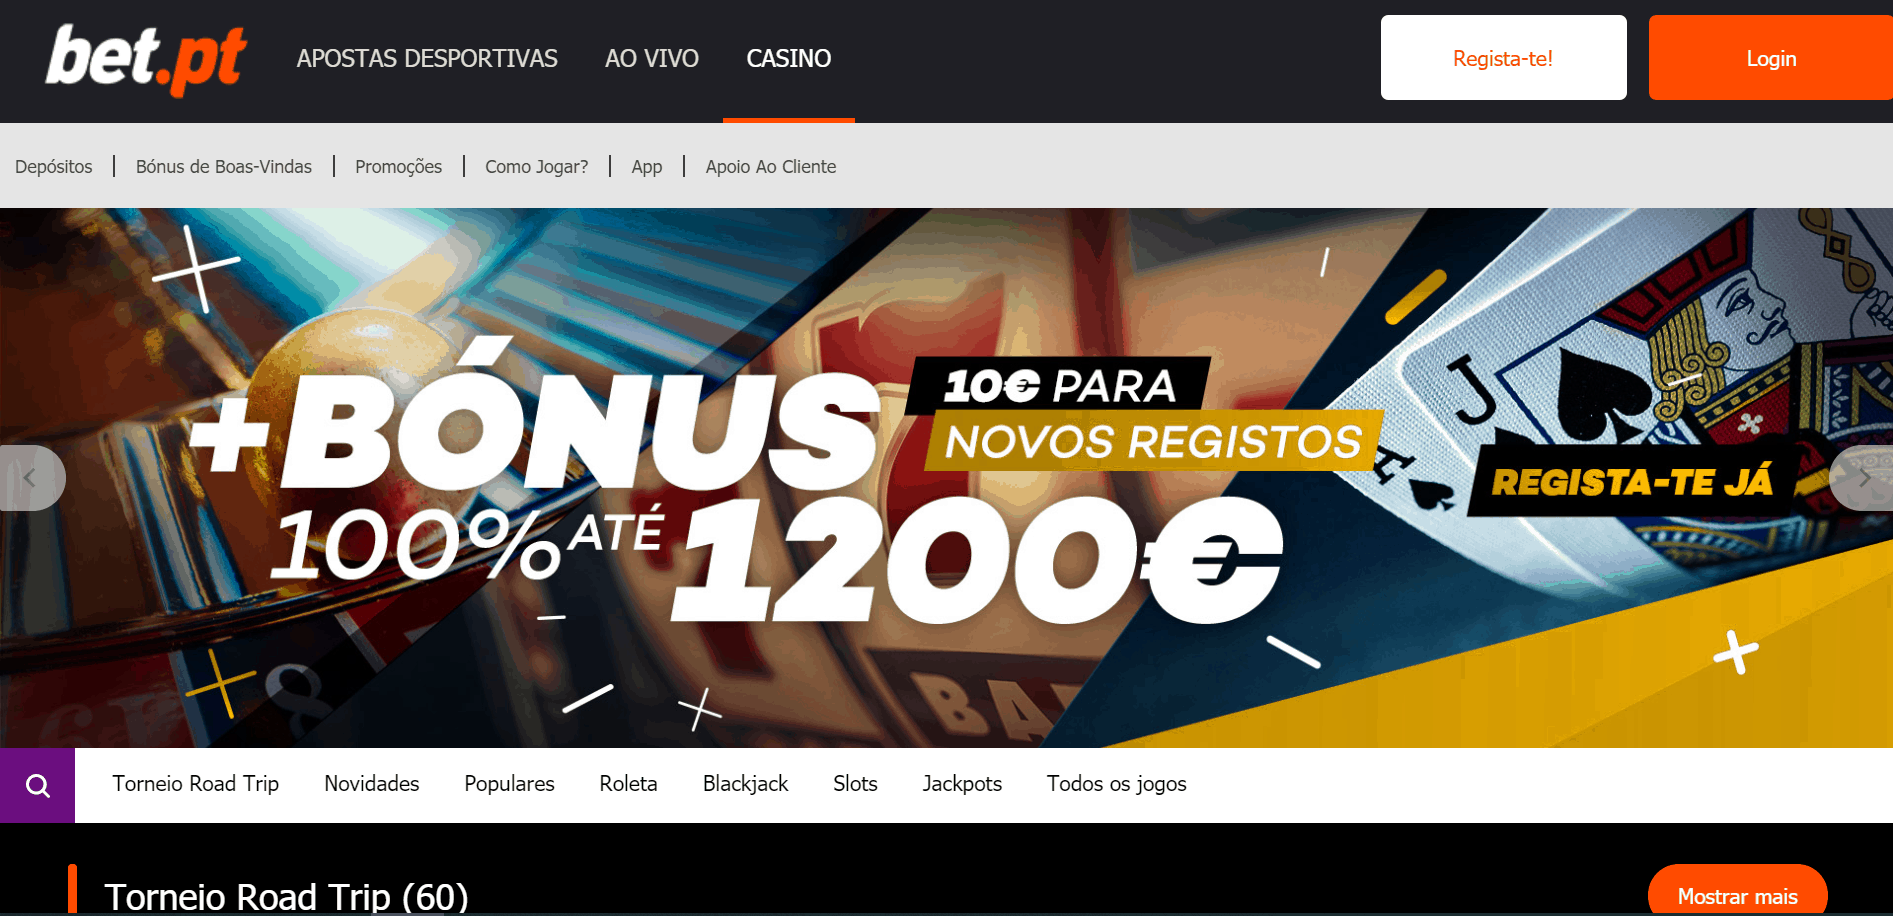 Online Casino PortugalThe Best Online Casino & Pokies Bonuses!